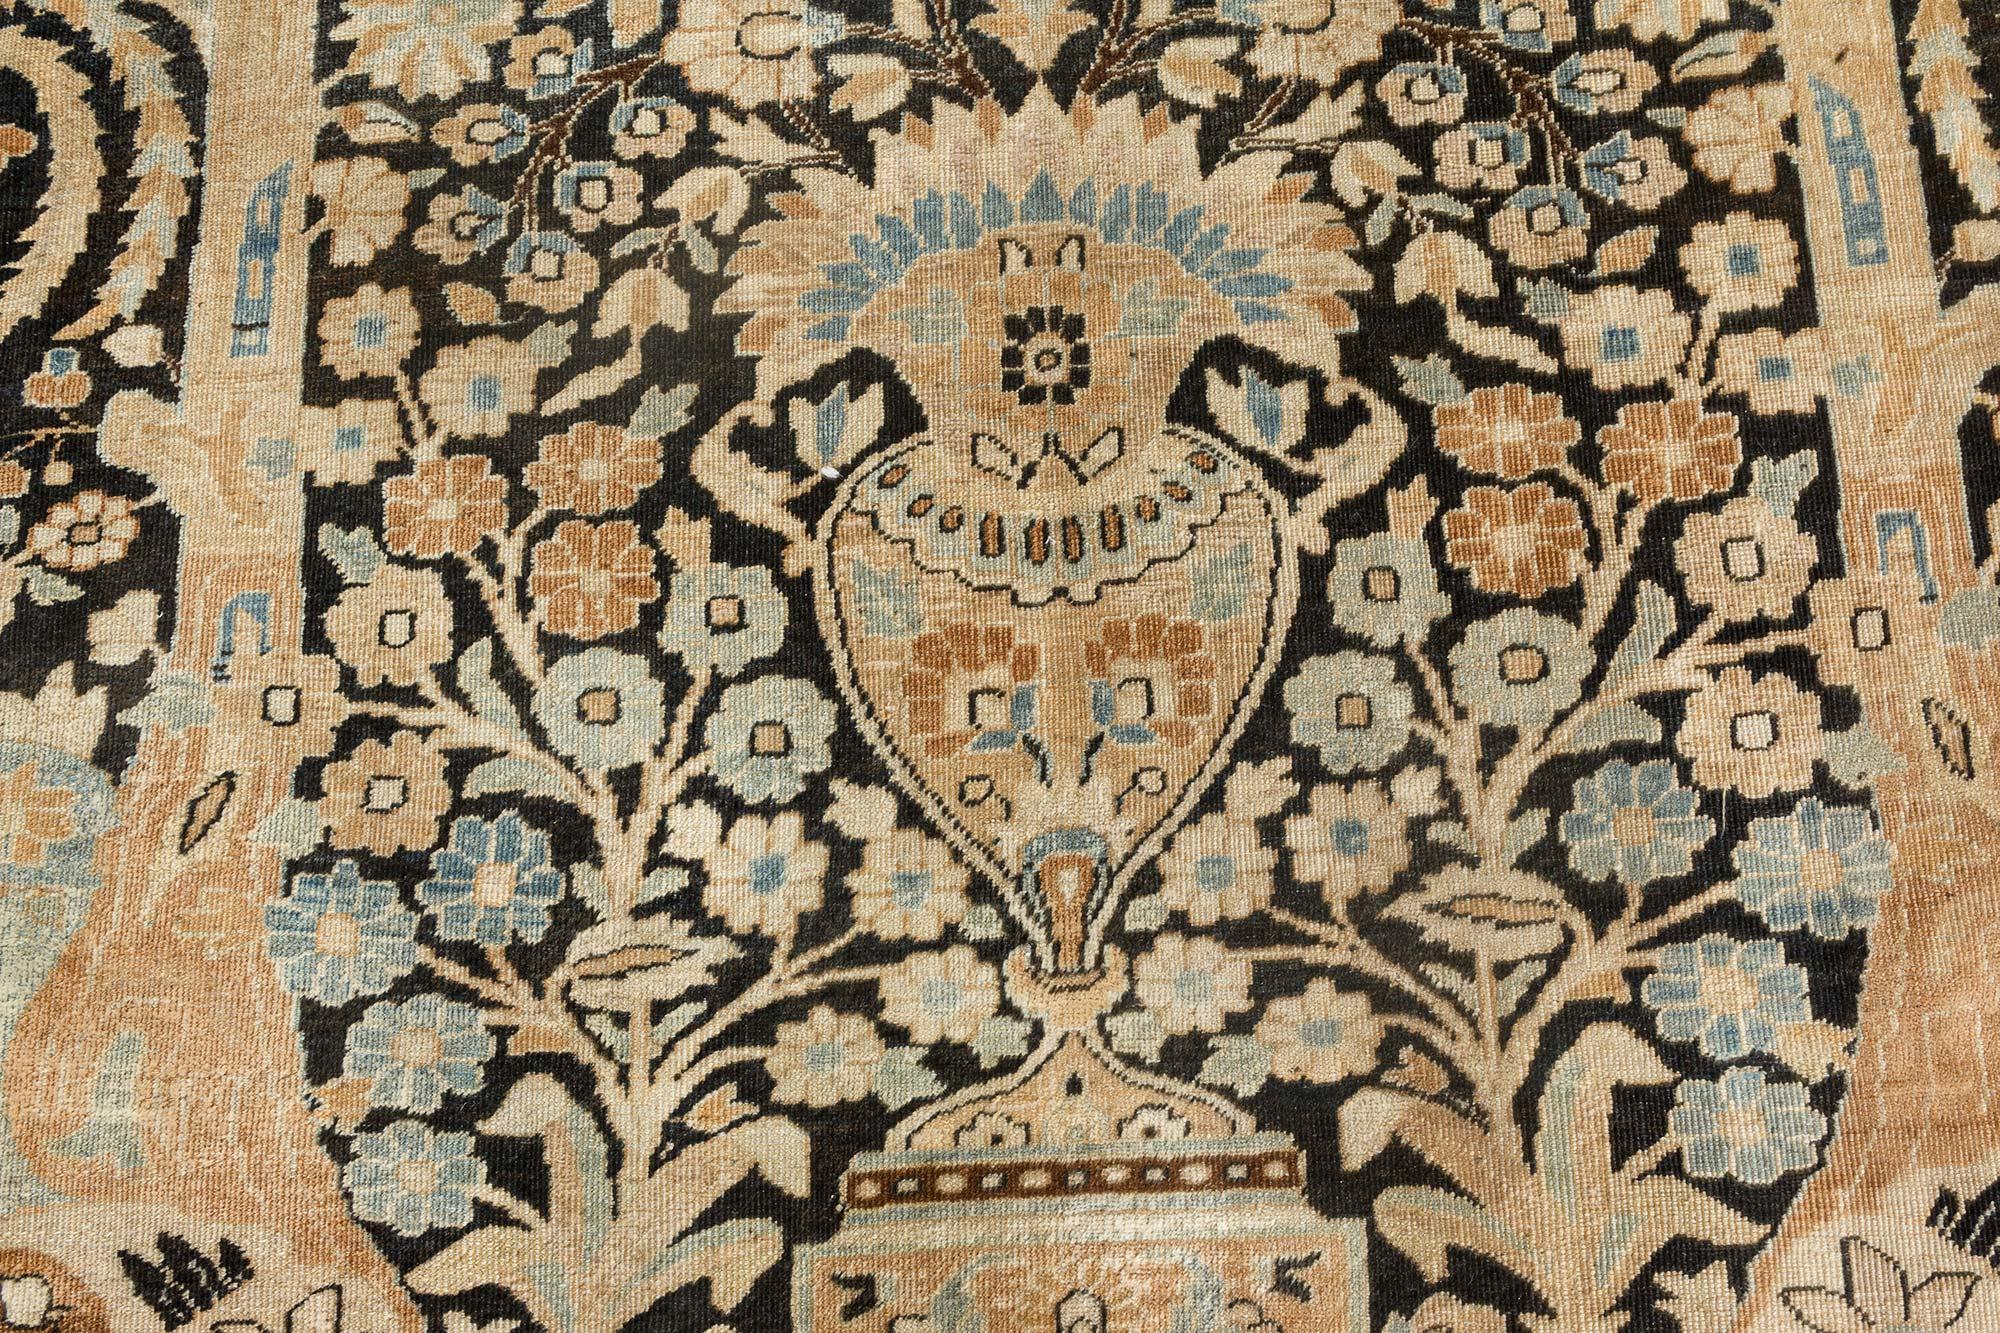 Authentic 19th century Persian Tabriz botanic handwoven wool rug
Size: 11'8